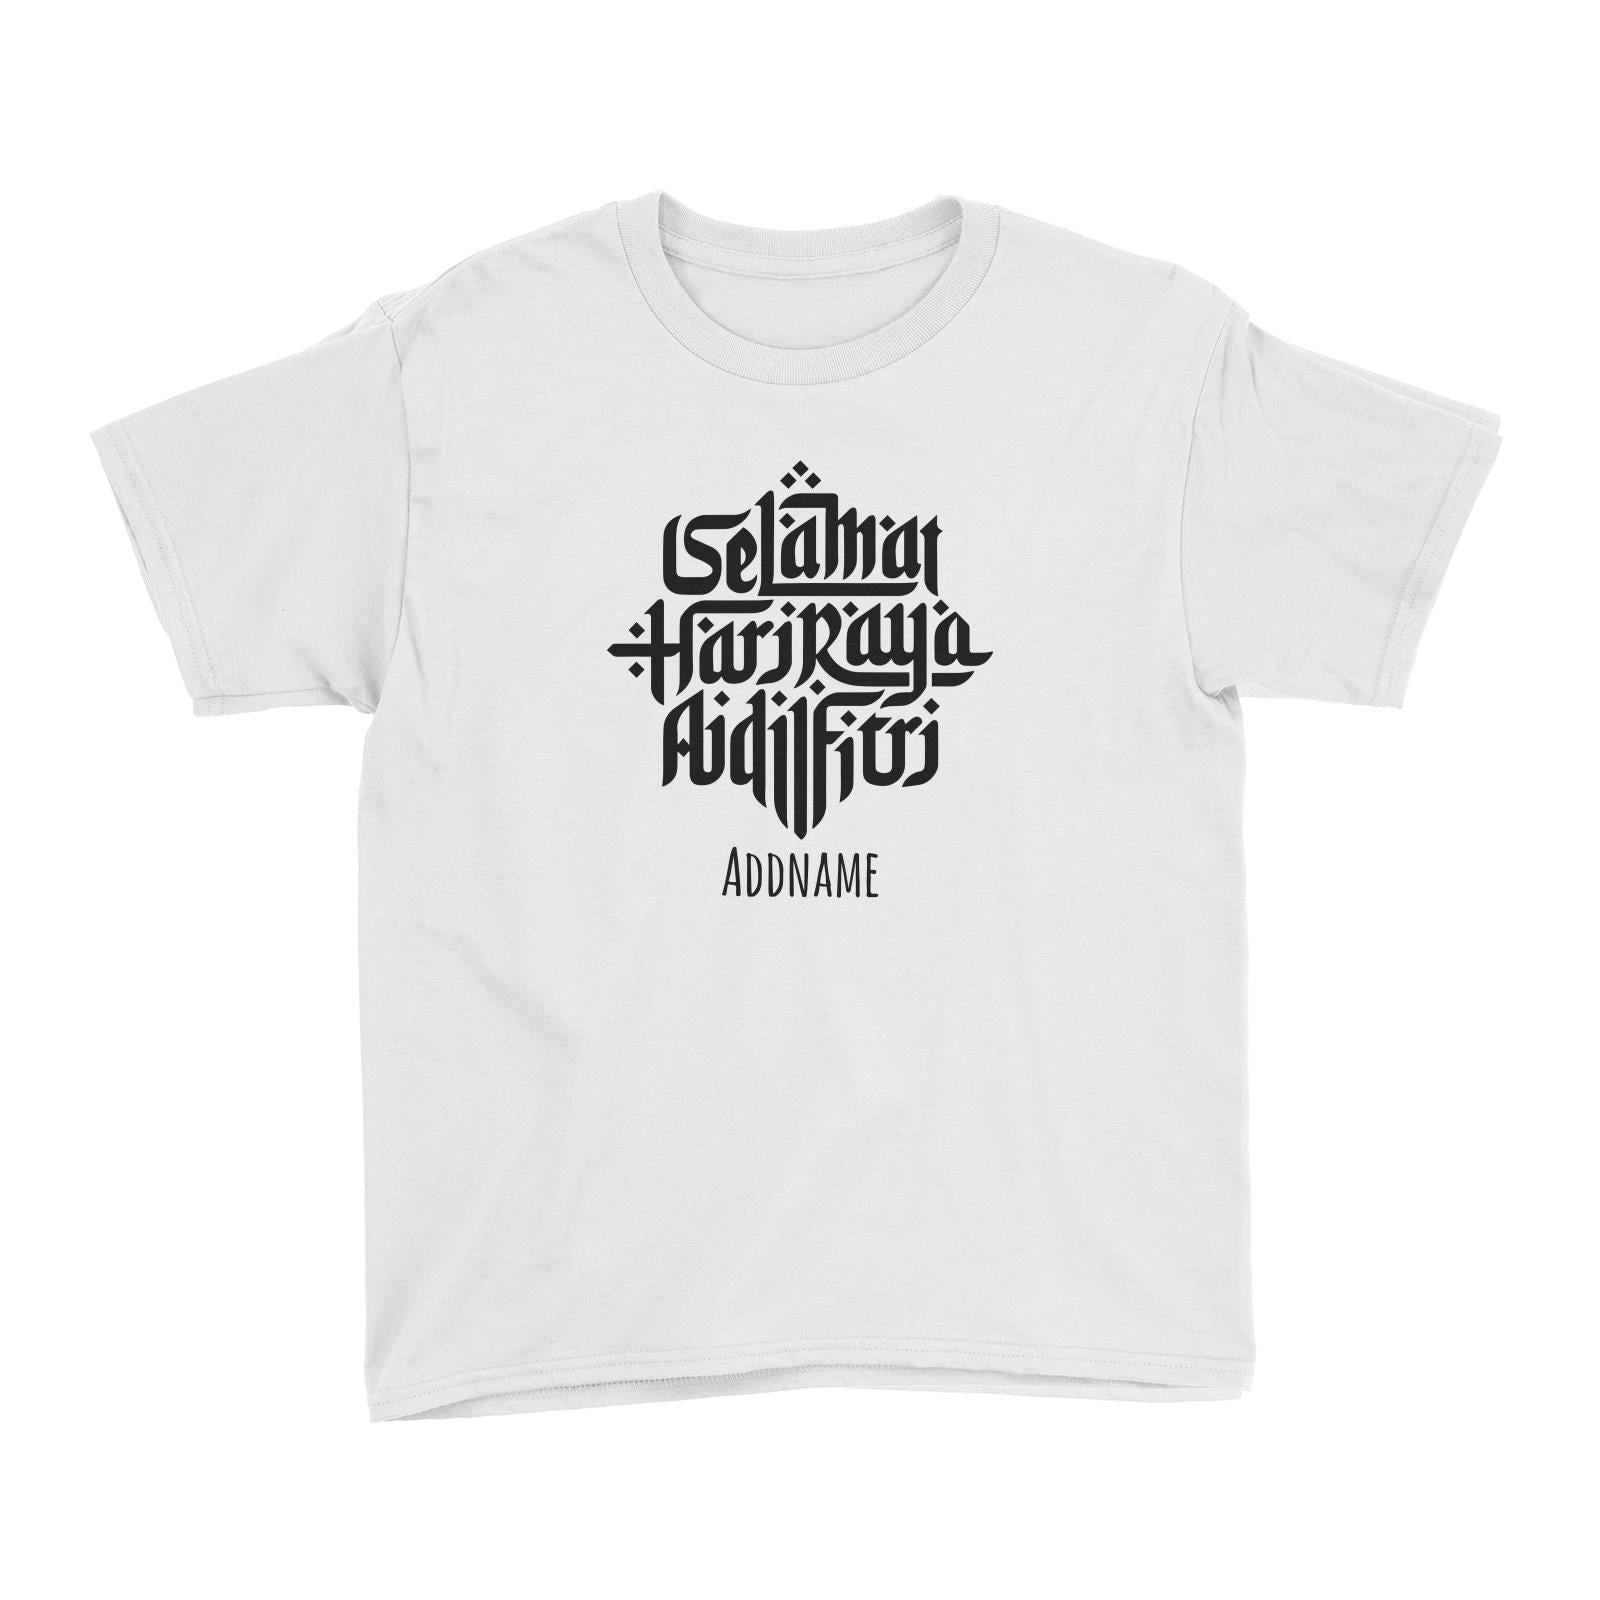 Selamat Hari Raya Aidilfitri Kid's T-Shirt  Personalizable Designs